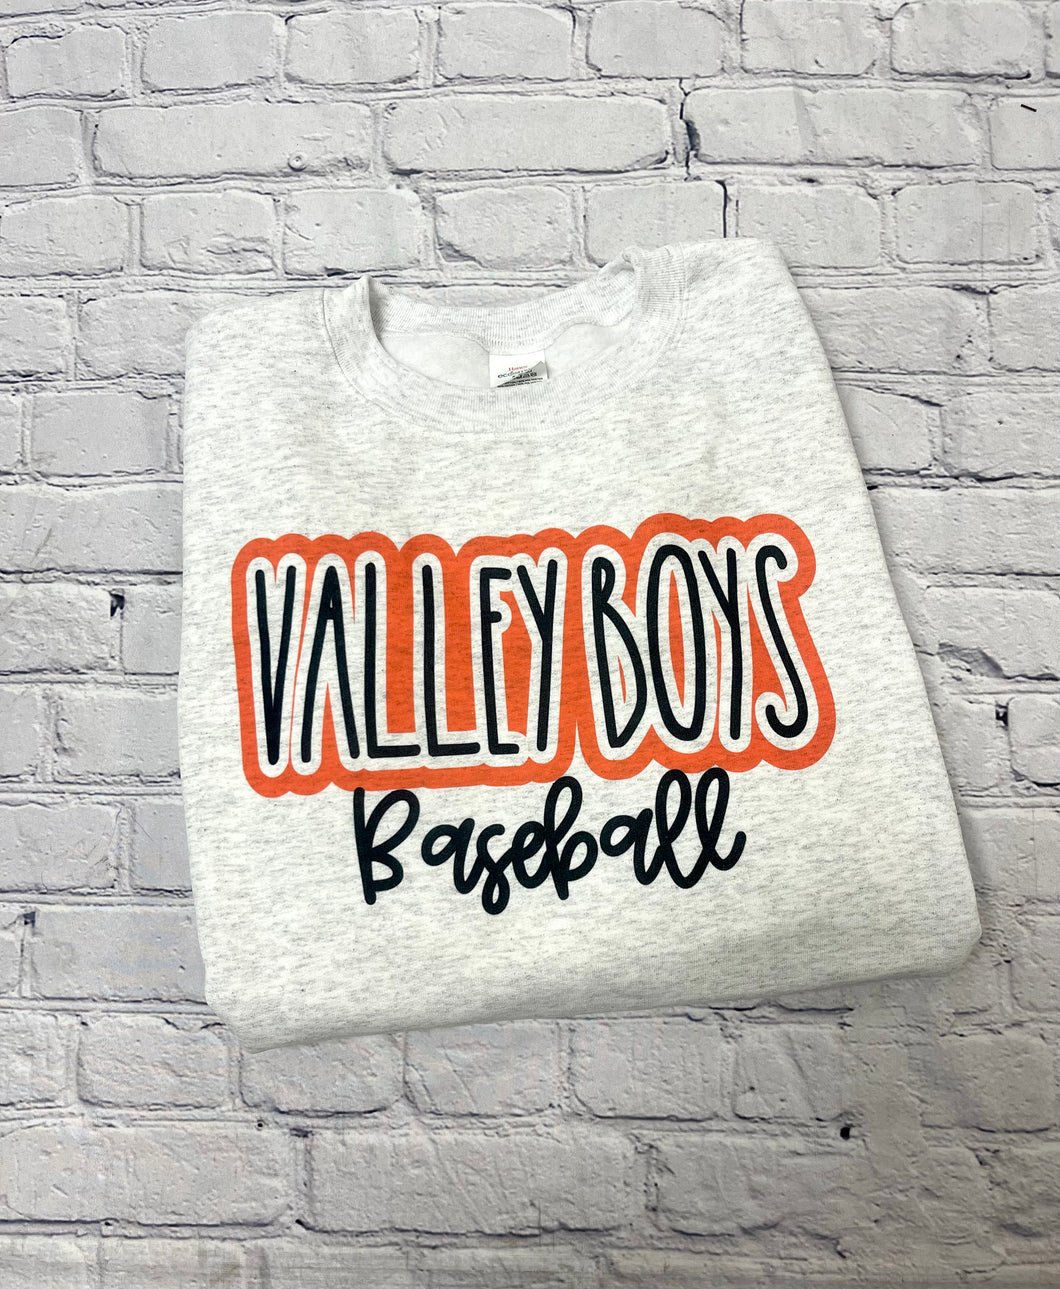 Valley Boys Baseball T-Shirt or Sweatshirt